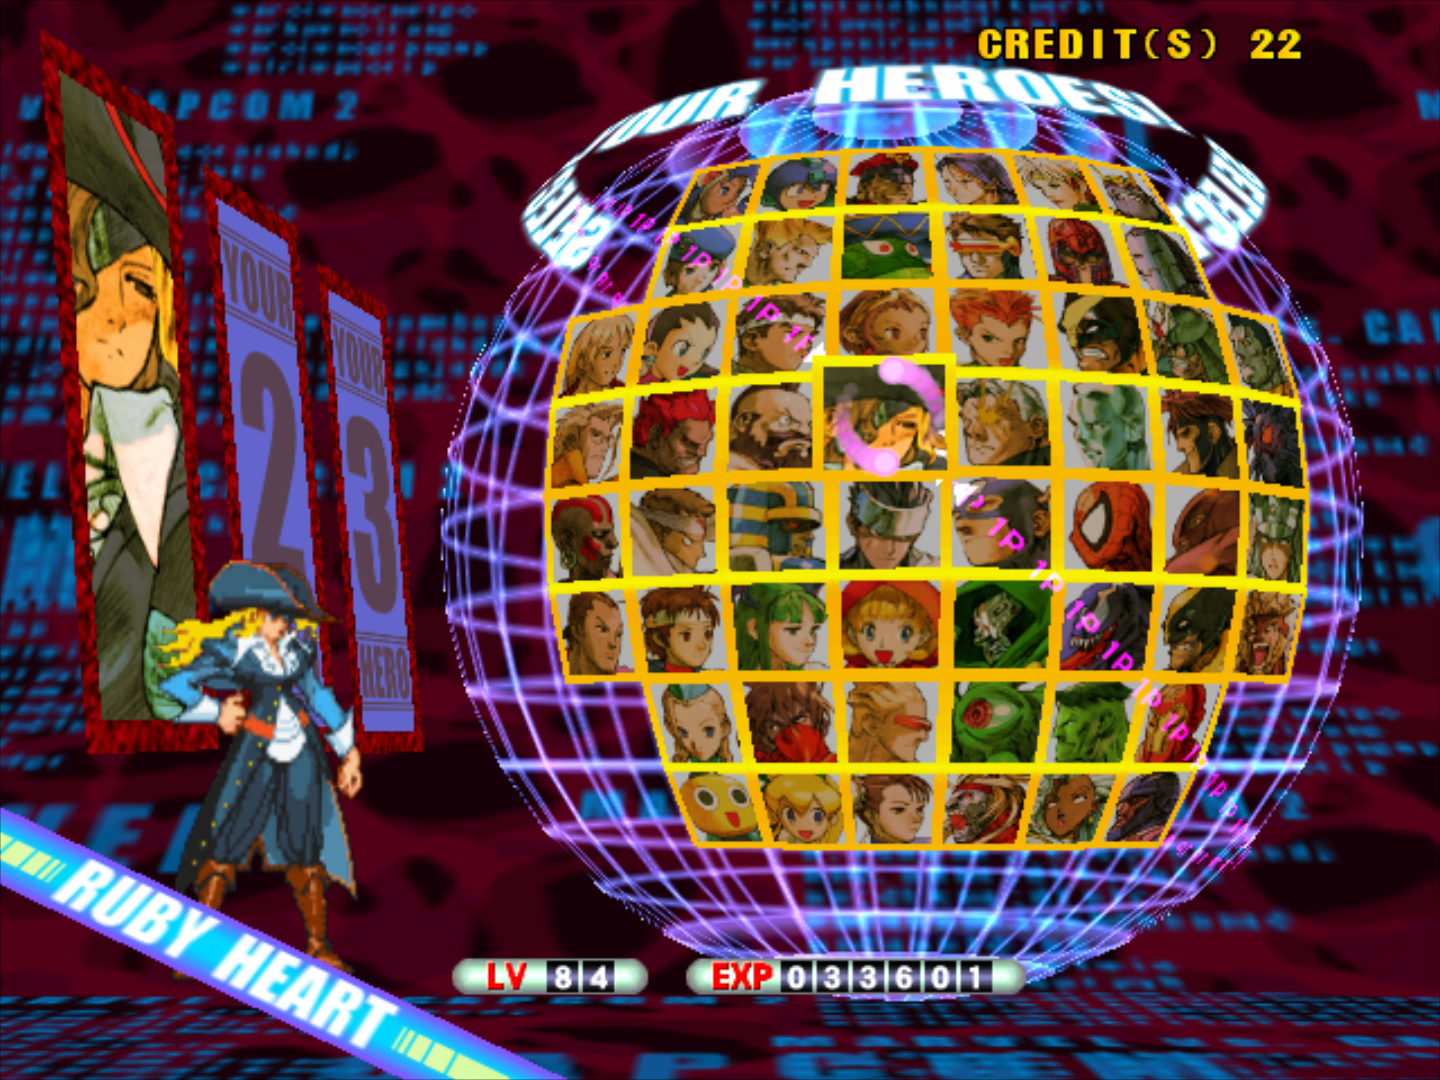 Character select screen for the arcade game Mavel Vs Capcom 2